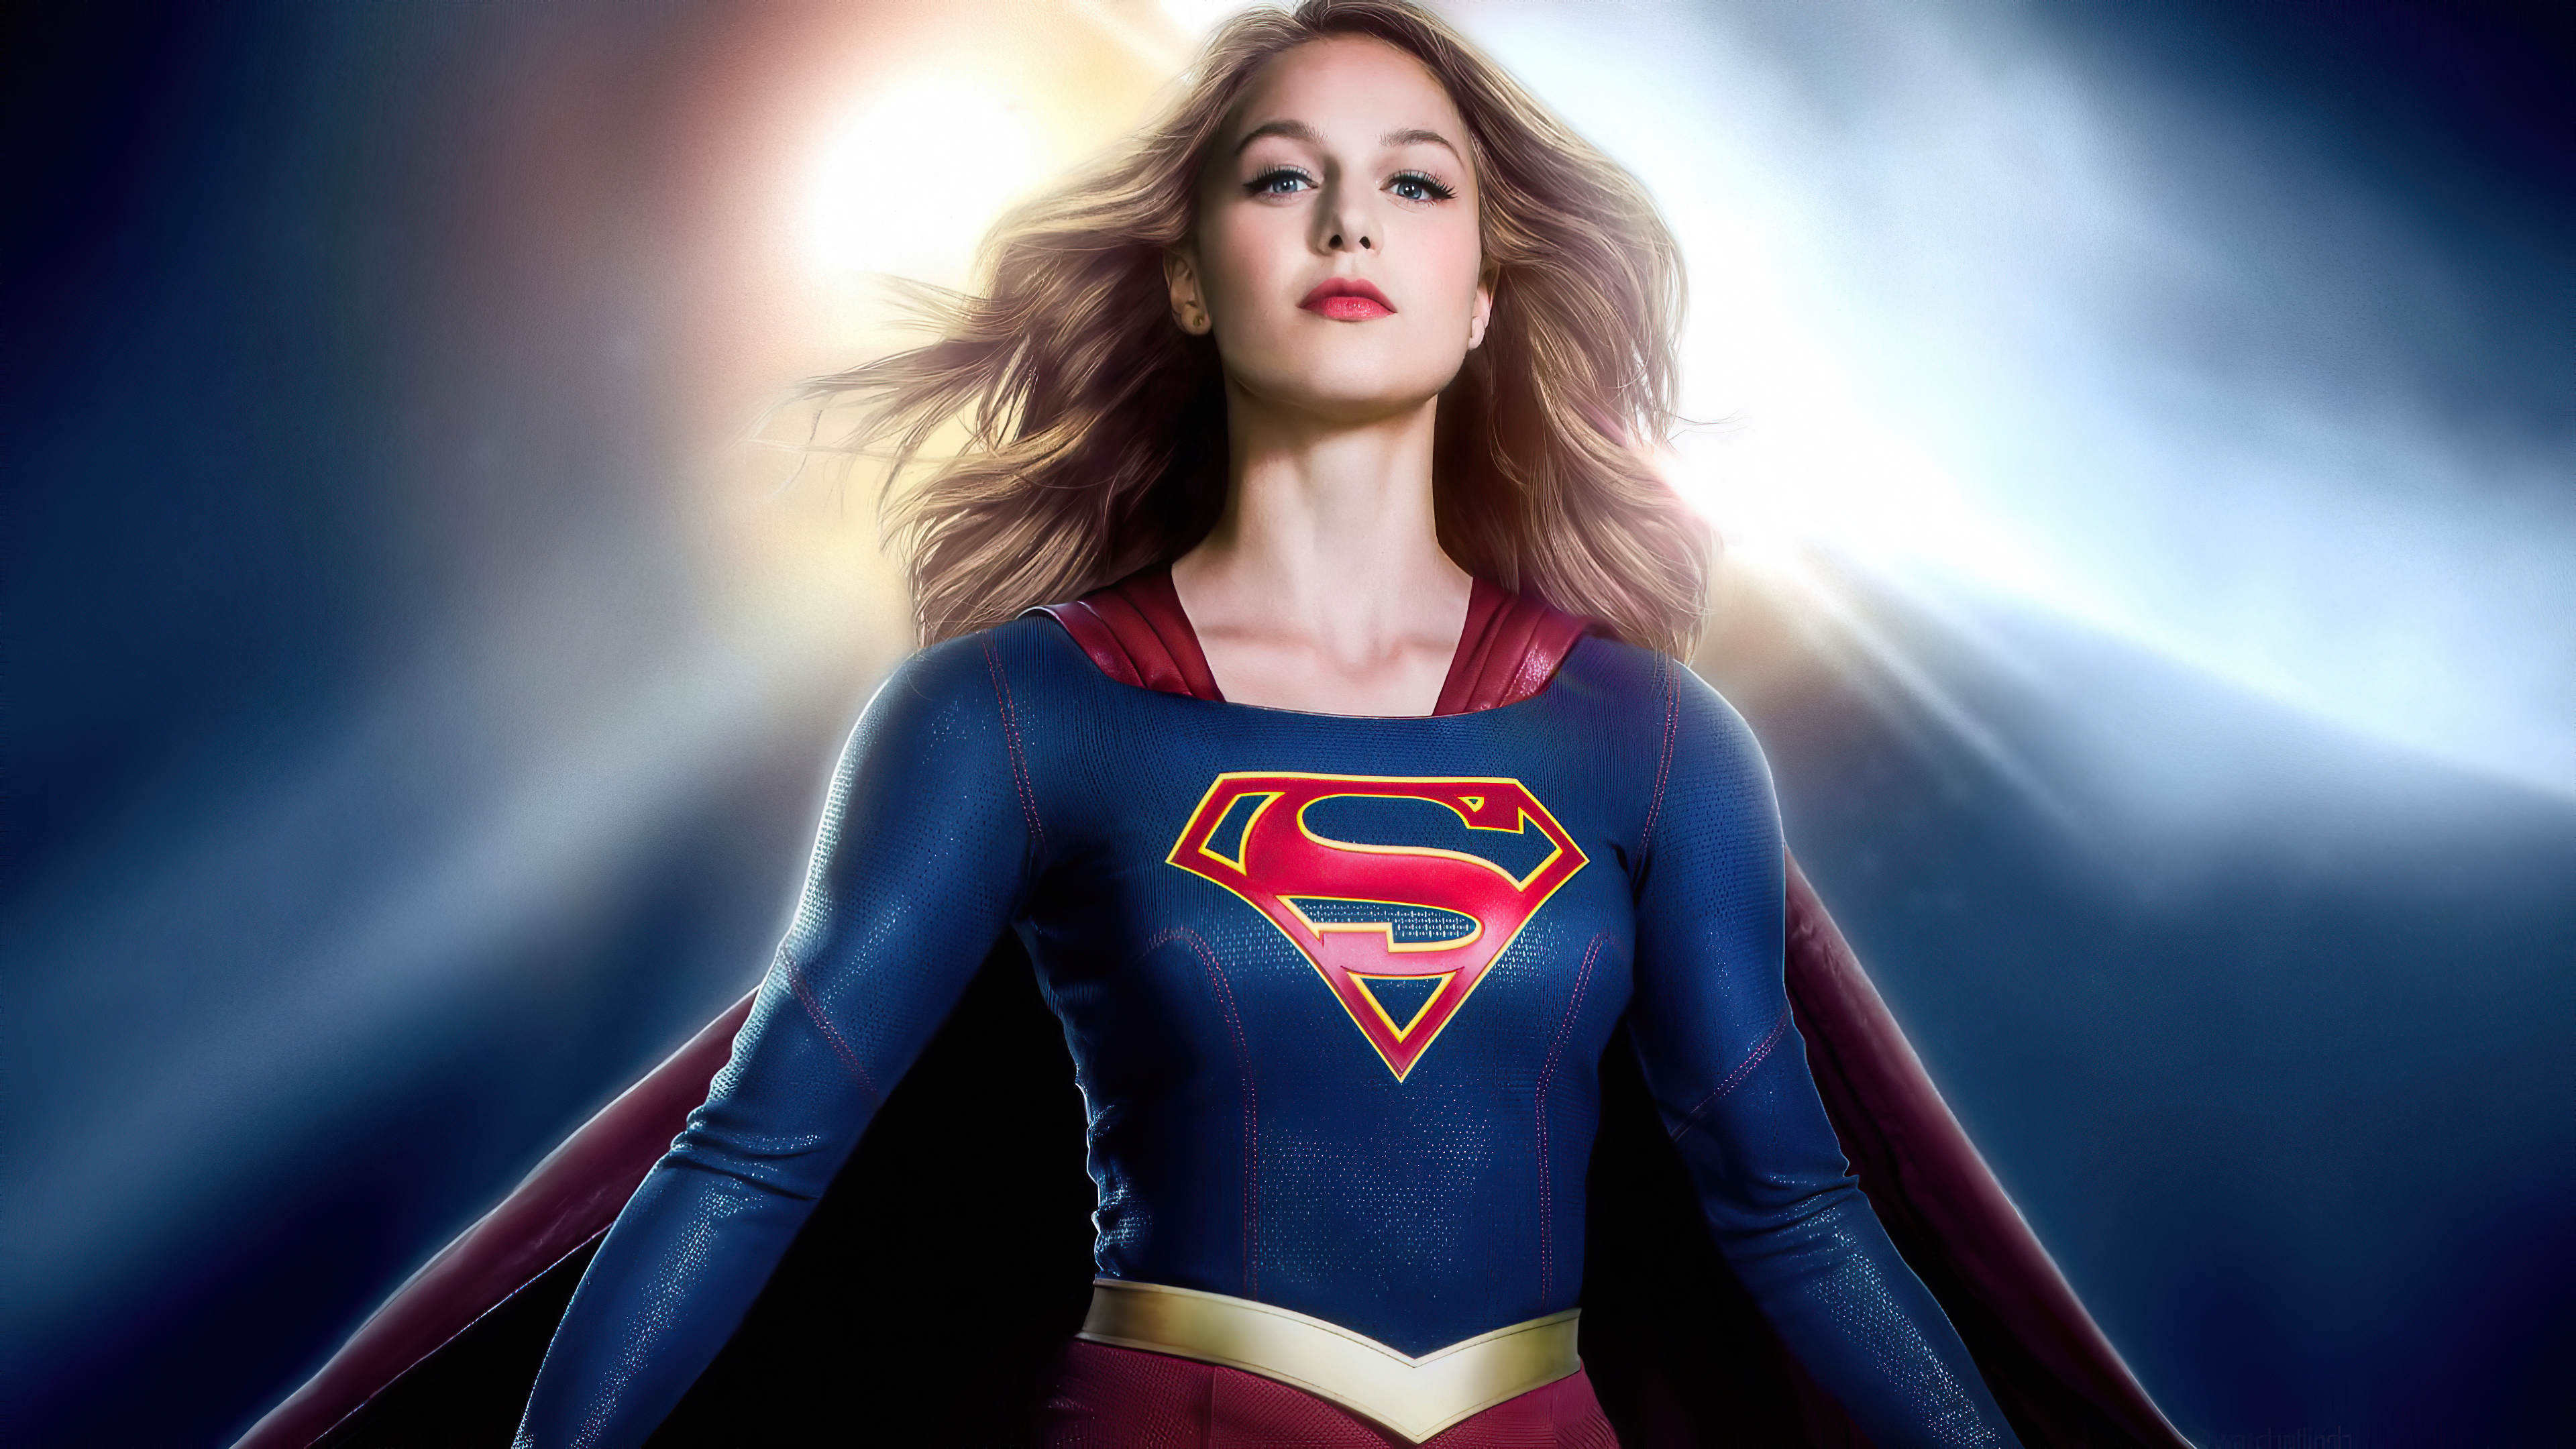 Kara Zor E Supergirl 4k Wallpaper Hd Tv Series 4k Wallpapers Images And Background 